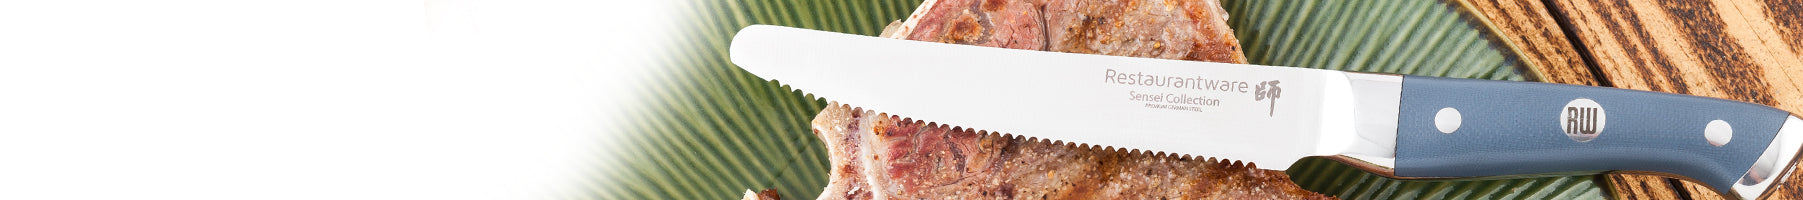 Banner_Smallwares_Kitchen-Knives-Cutlery_Steak-Knive_244s